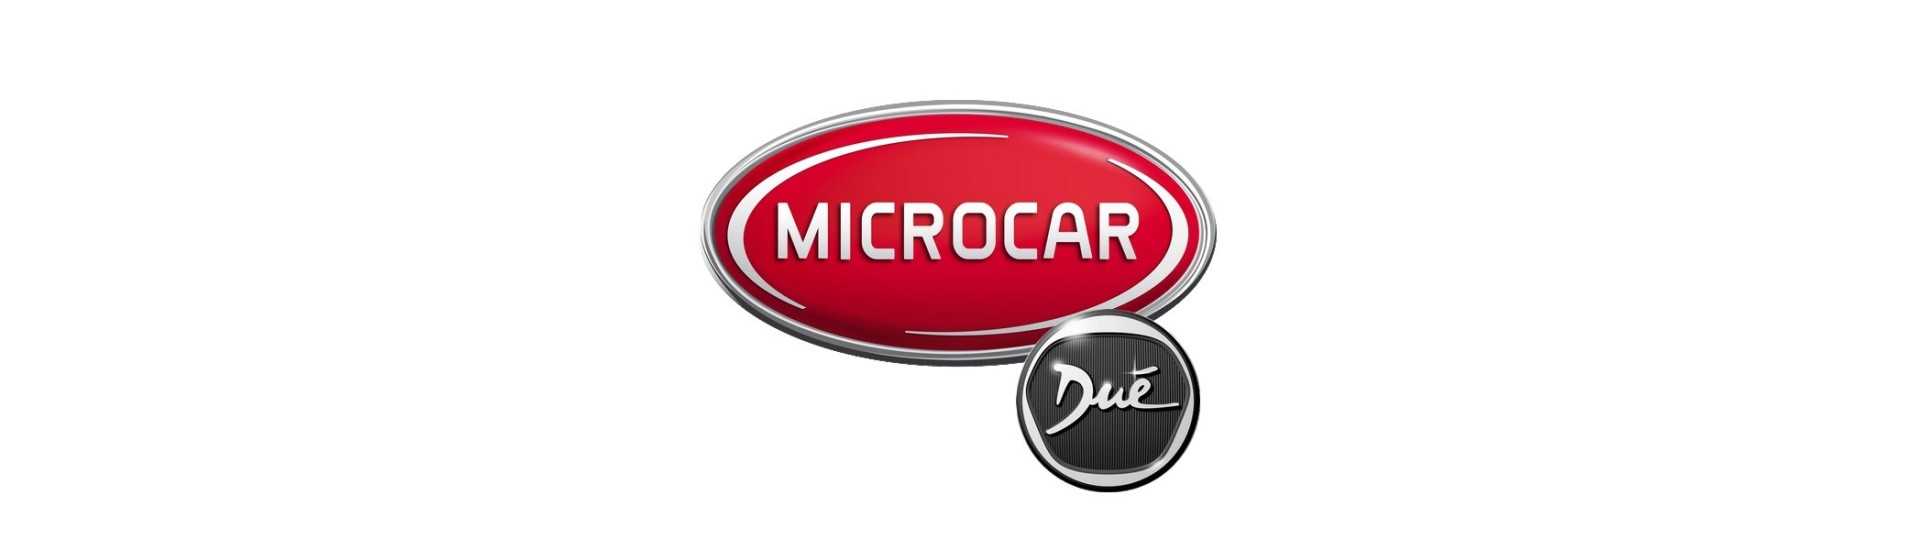 moottorivene parhaalla hinnalla ilman lupaa Microcar Dué